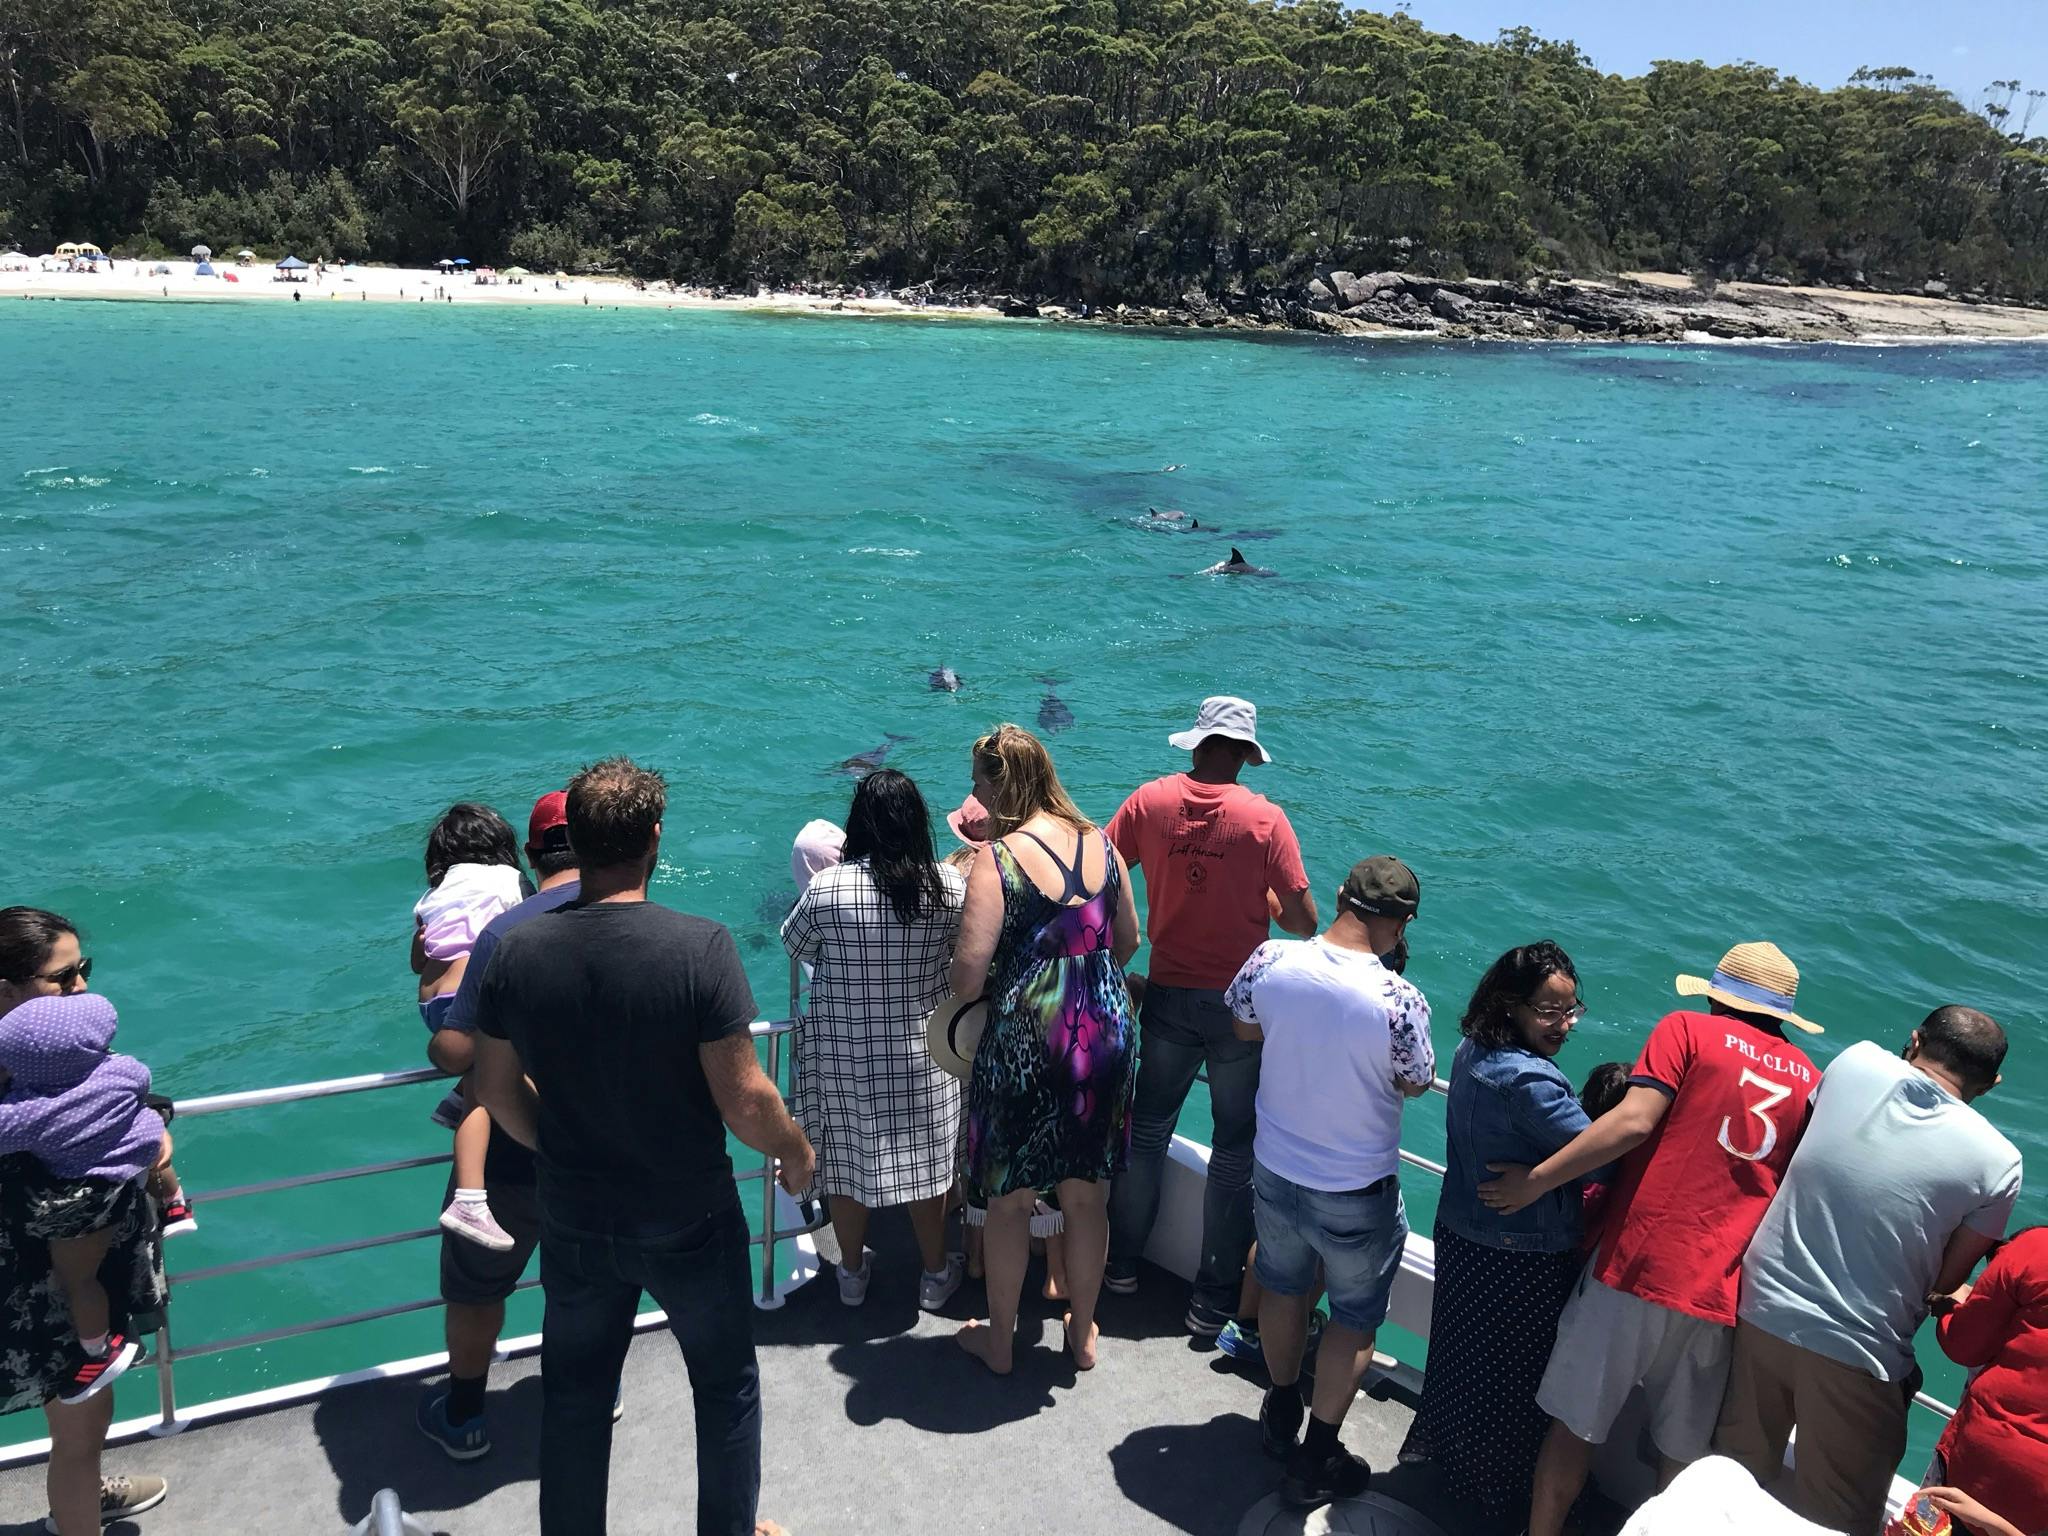 Jervis Bay dolfijn cruise tour